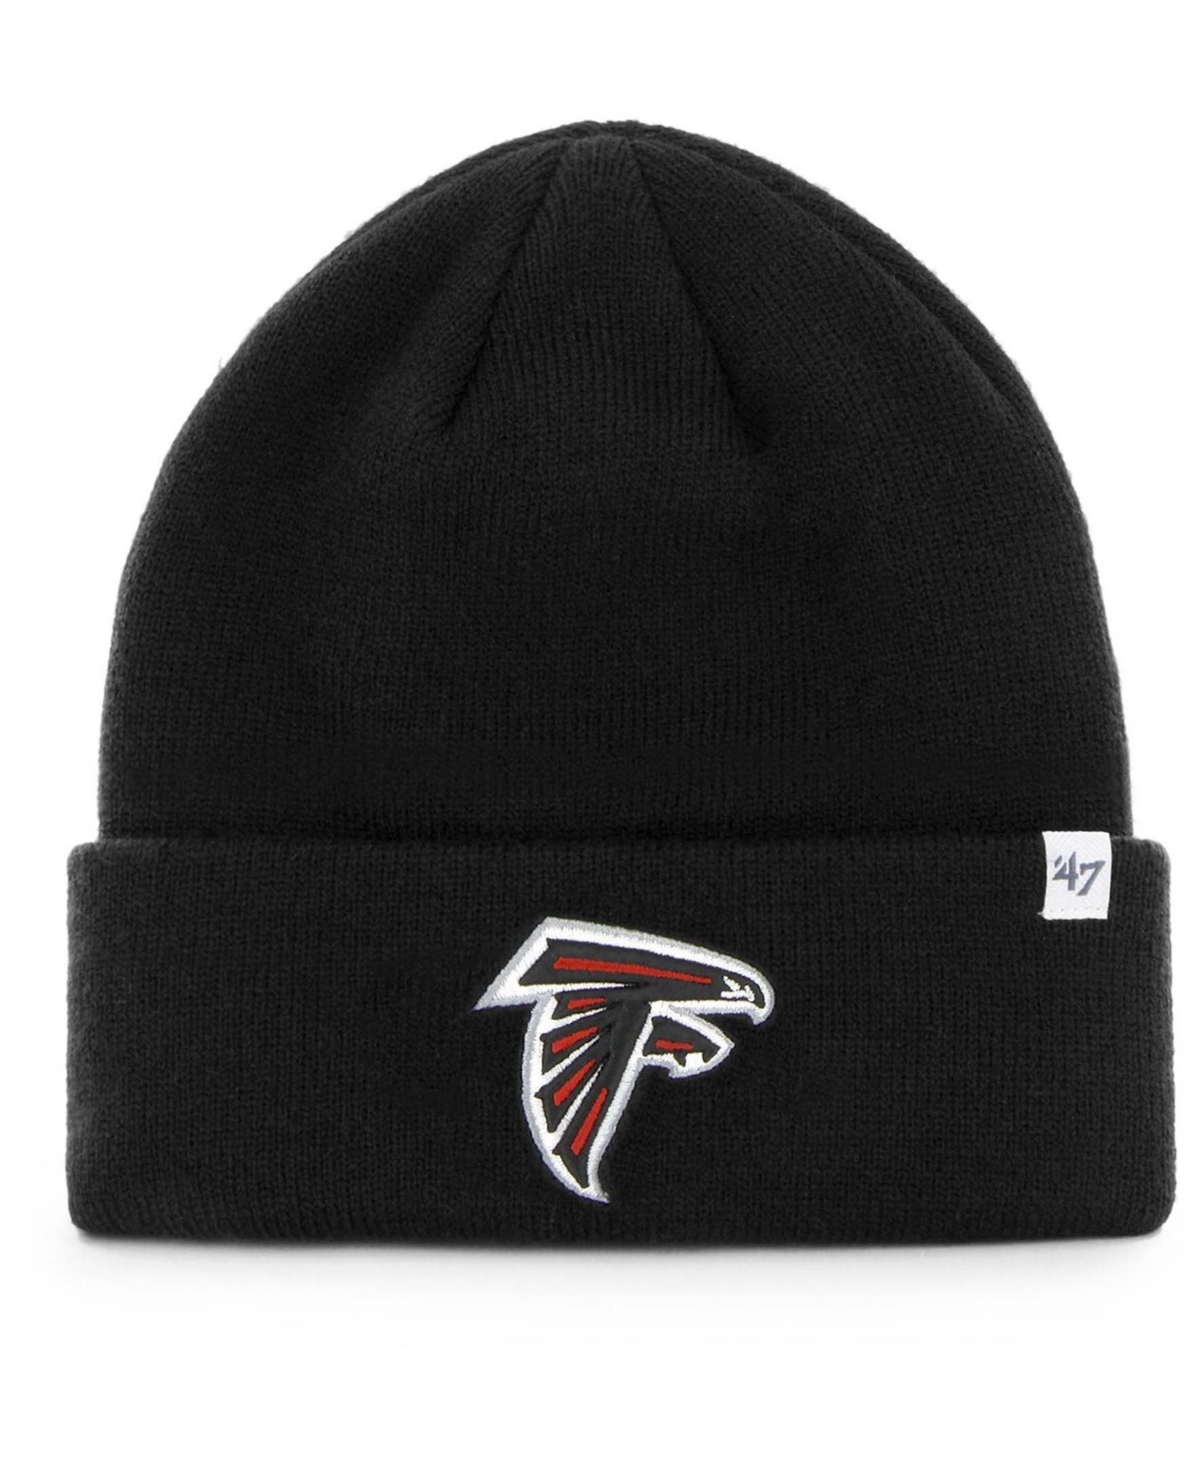 47 Brand Kids' Boys Black Atlanta Falcons Basic Cuffed Knit Hat